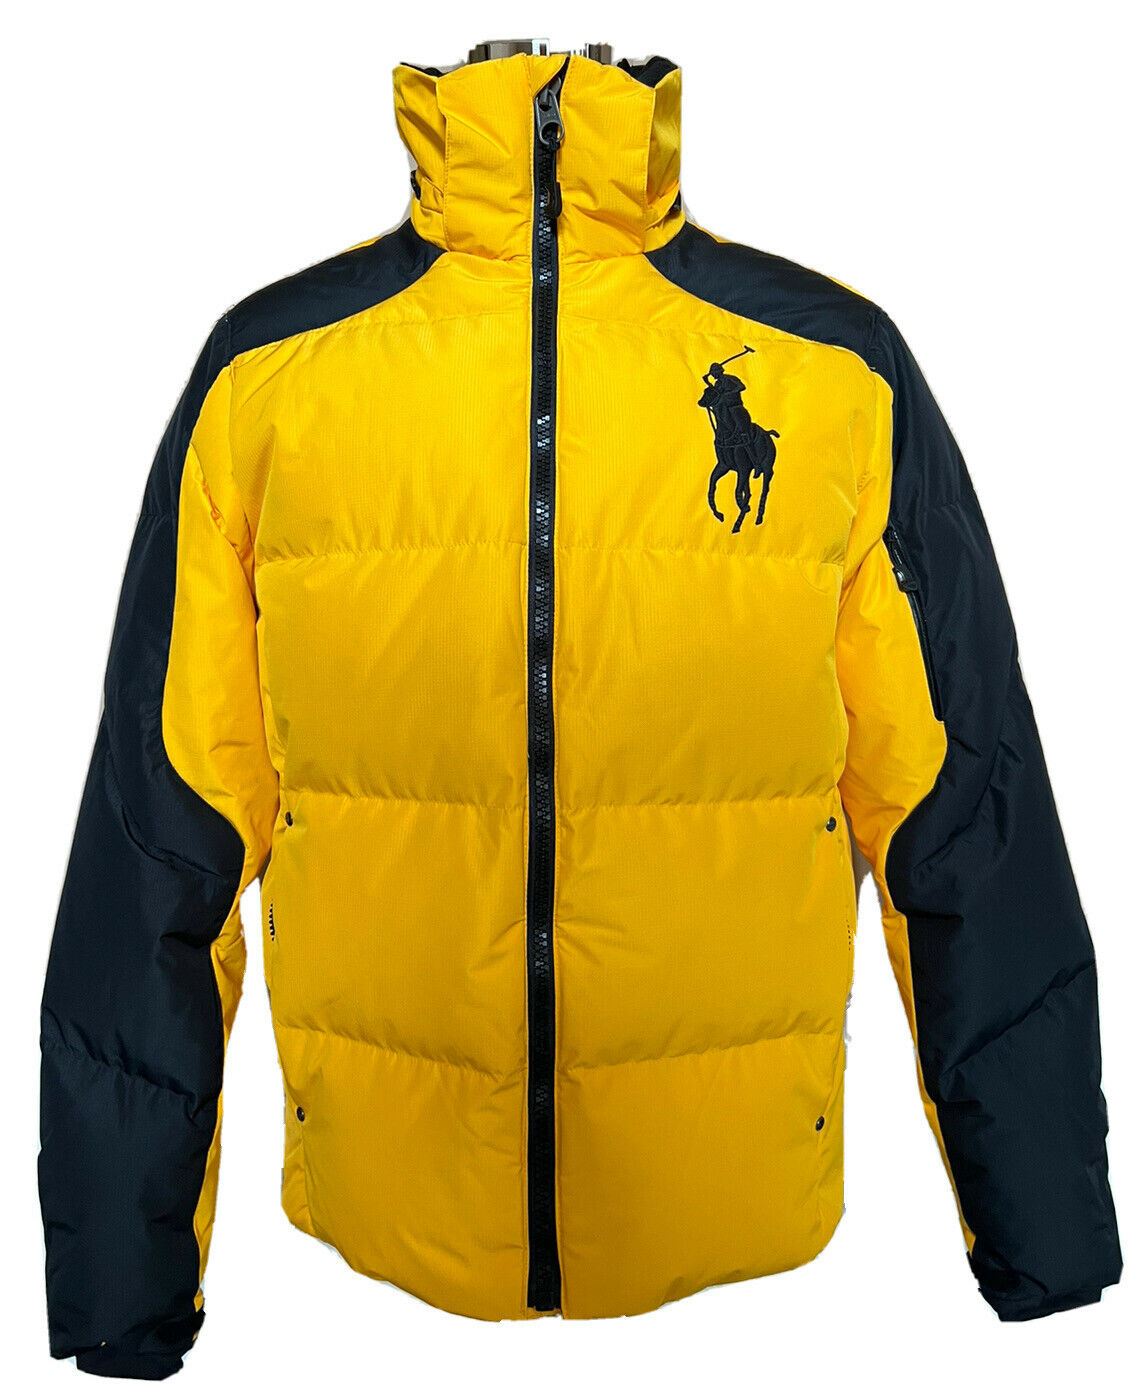 NWT $348 Polo Ralph Lauren Men's Yellow/Black Hoodie Parka Jacket Medium